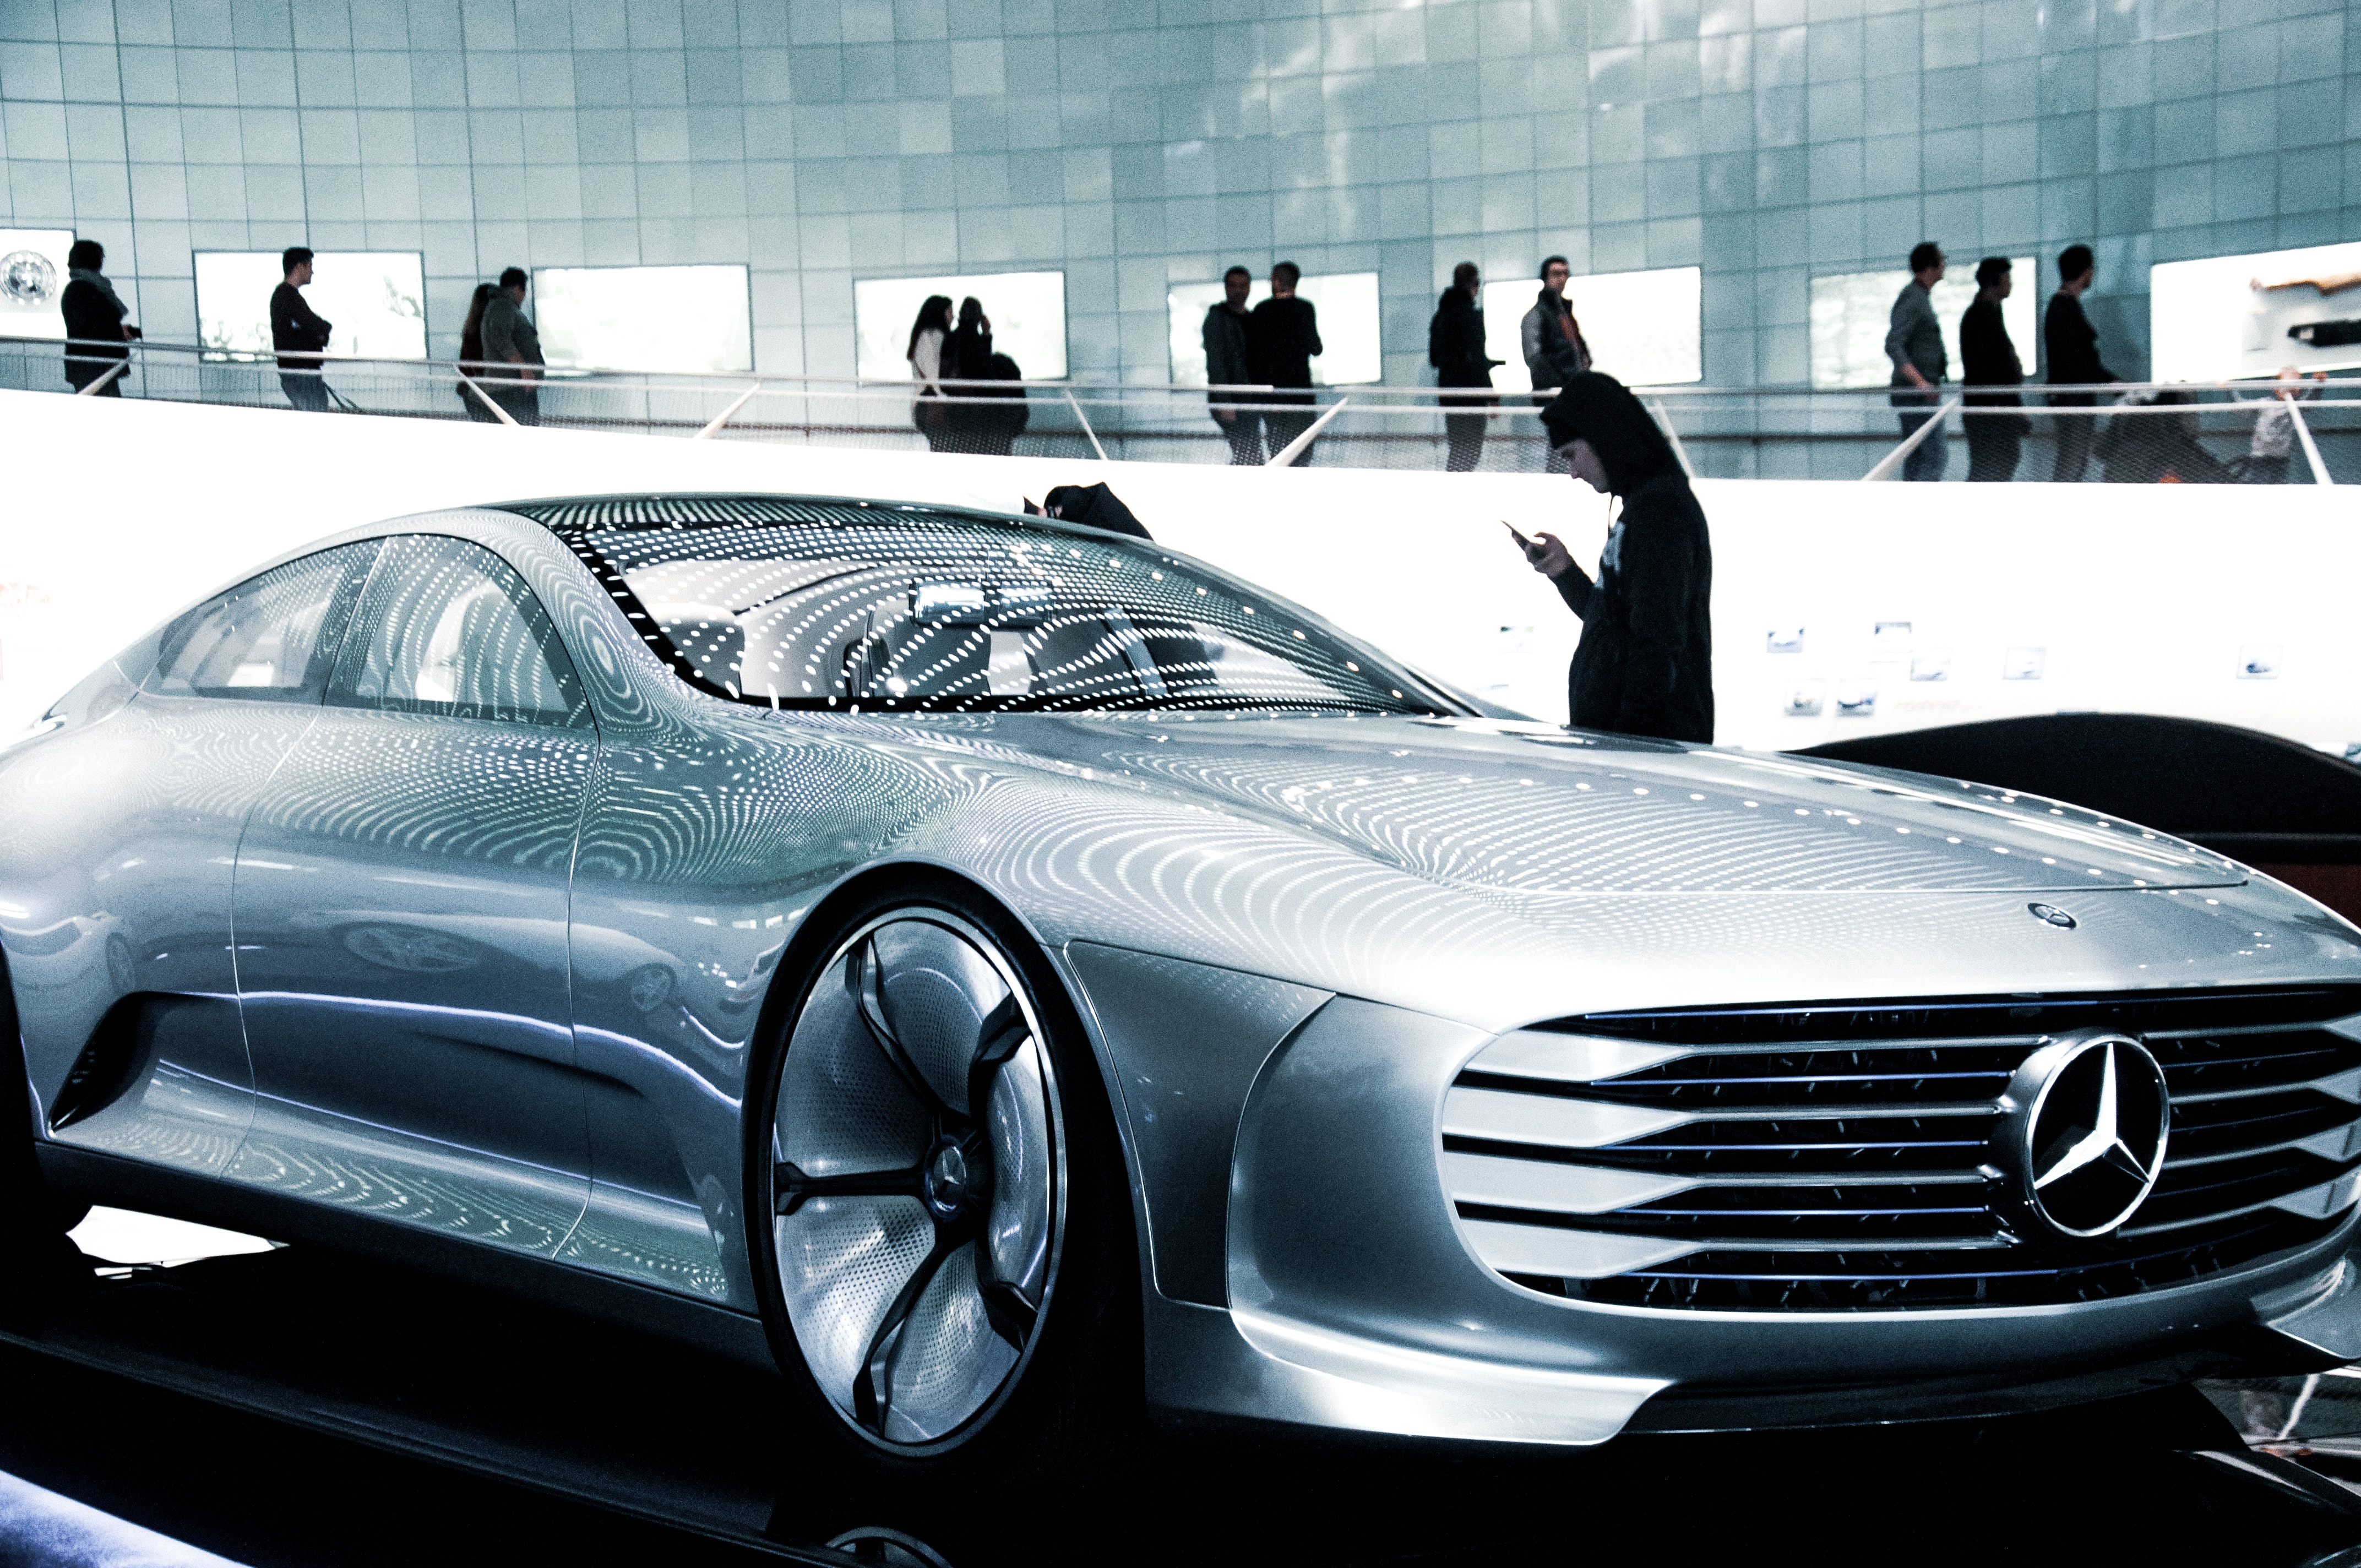 futuristic car (photo by Mohd Hammad)